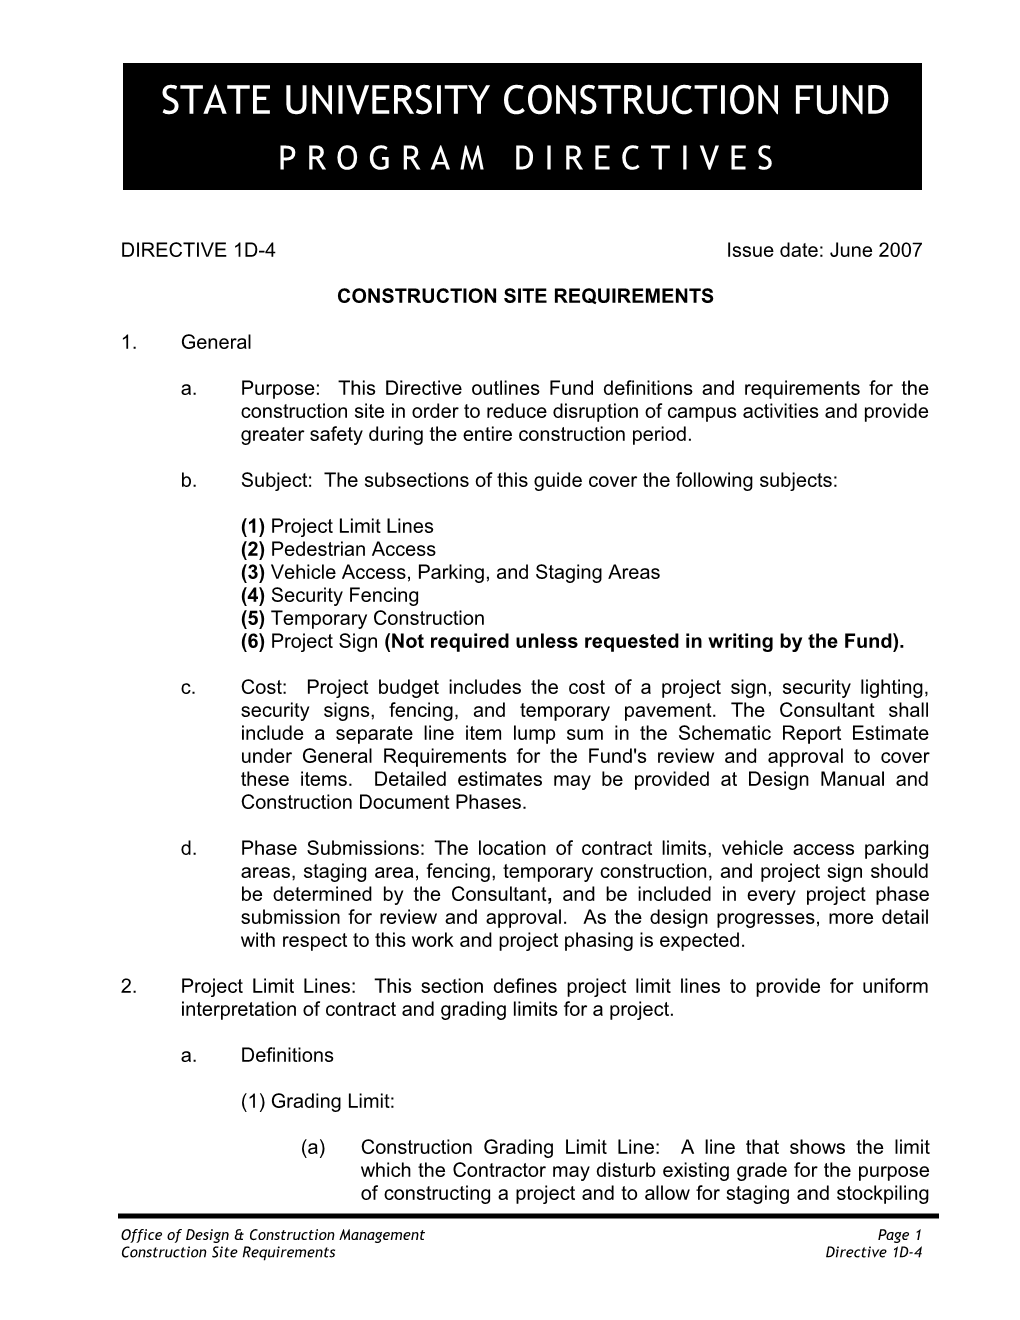 Directive 1D-4 Construction Site Requirements